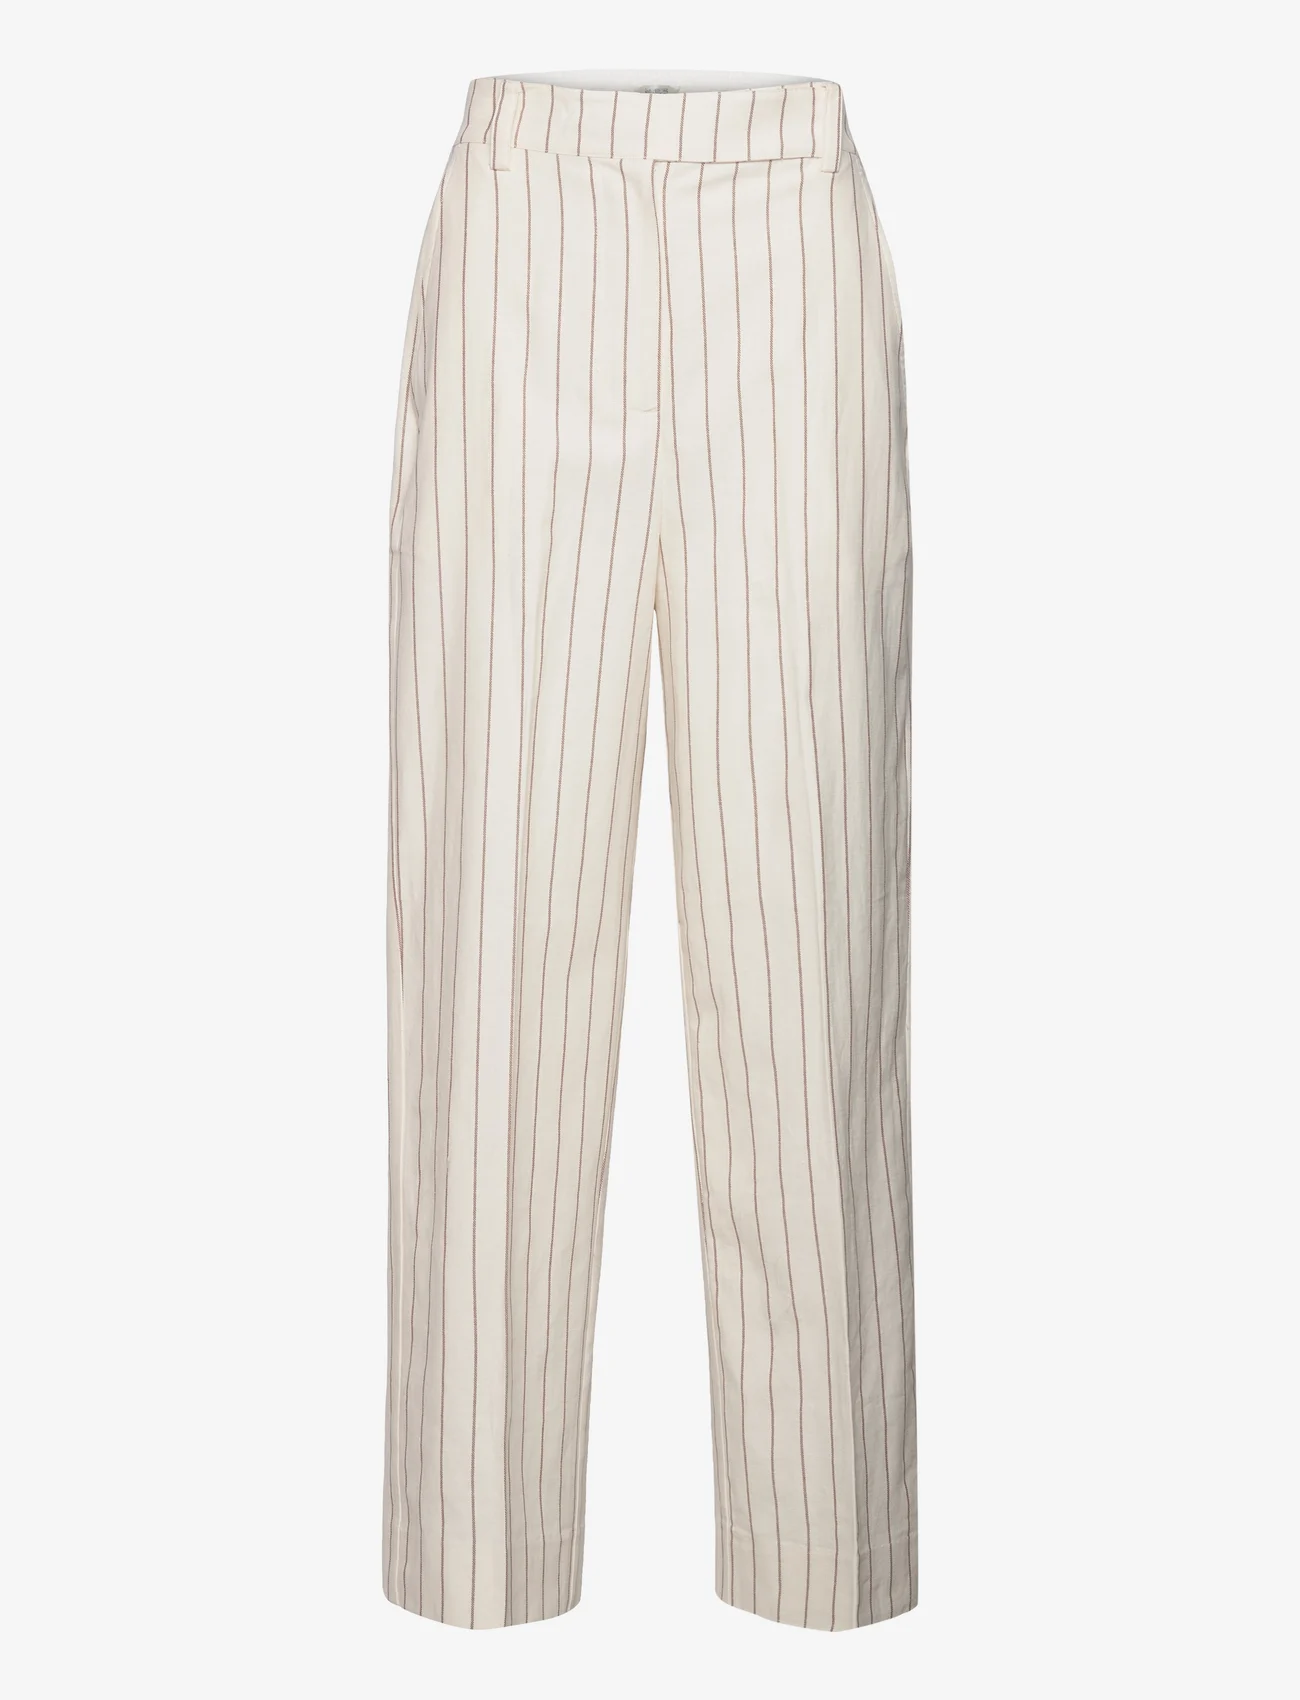 Second Female - Spigato Trousers - antique white - 0